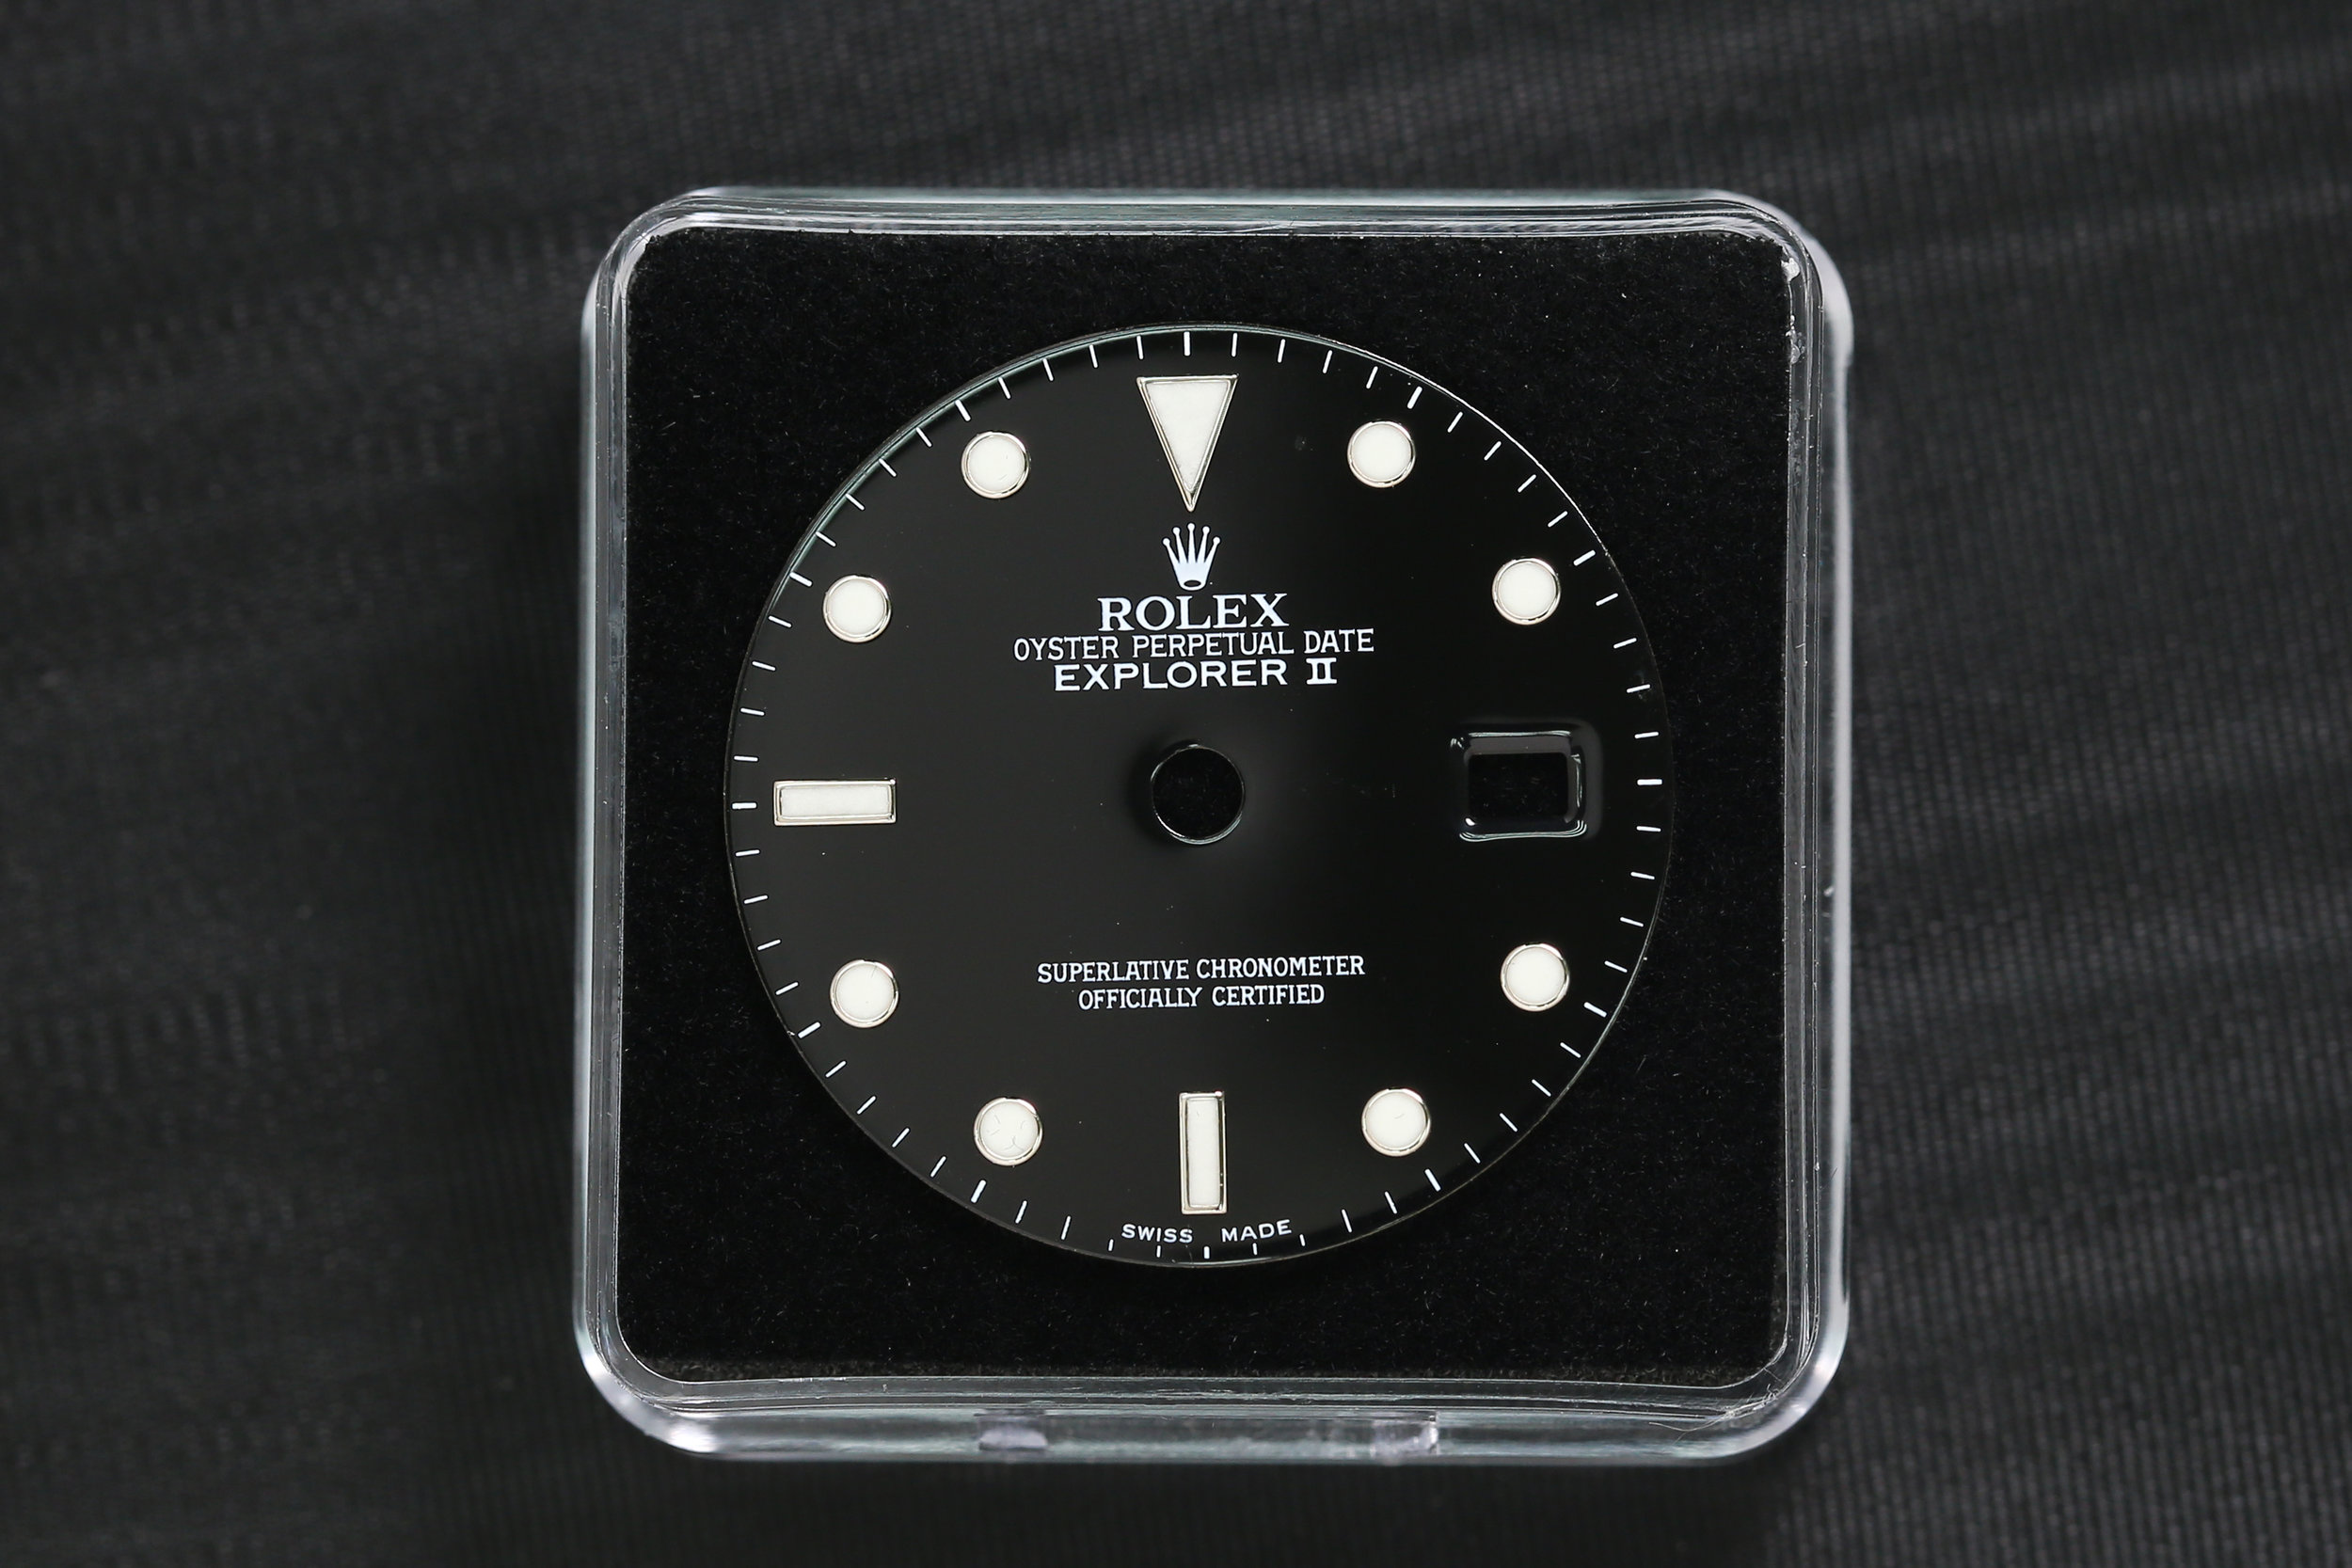 rolex submariner dial replacement